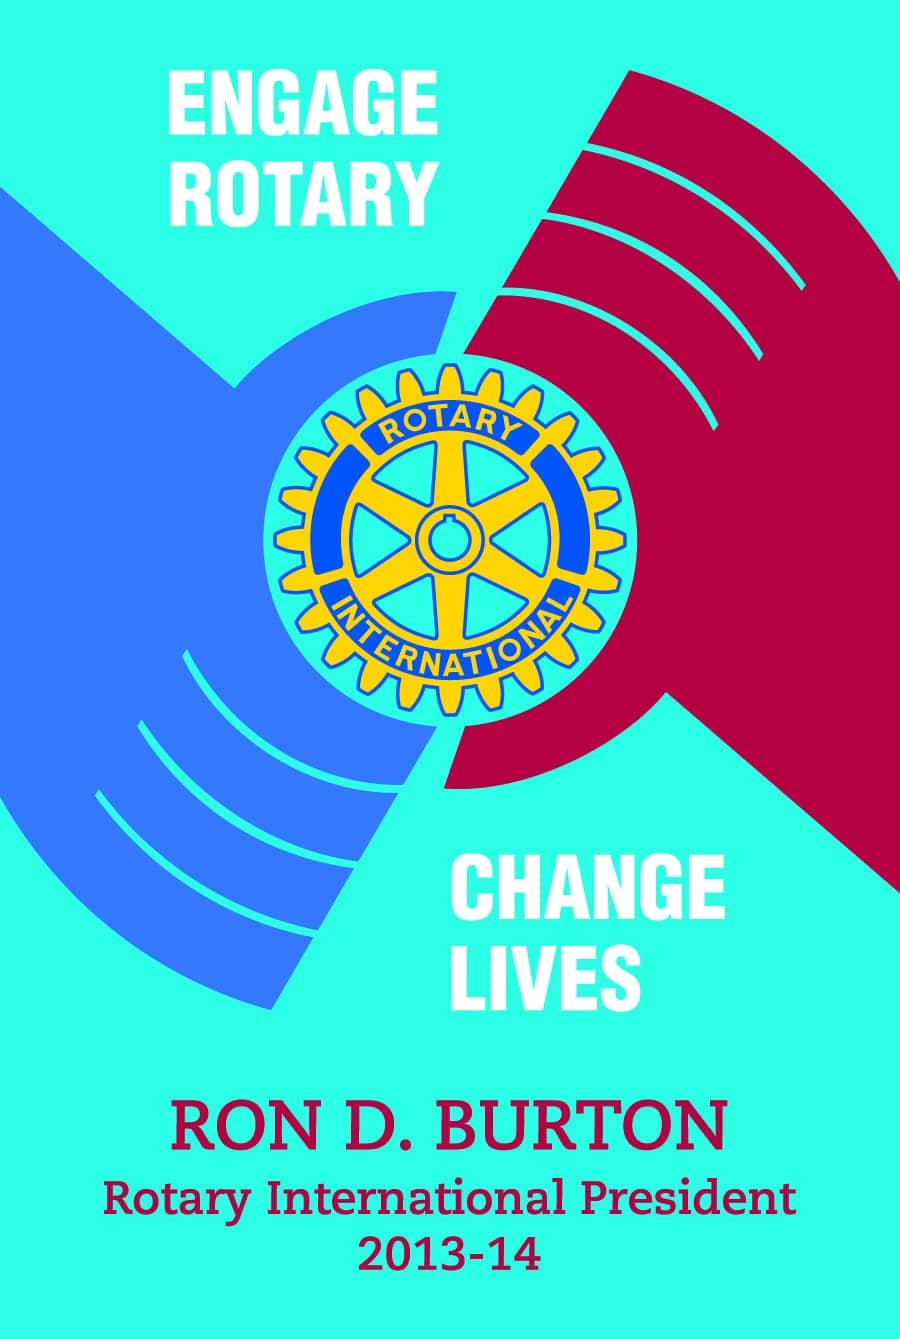 2013-2014 RI Theme "Engage Rotary Change Lives"